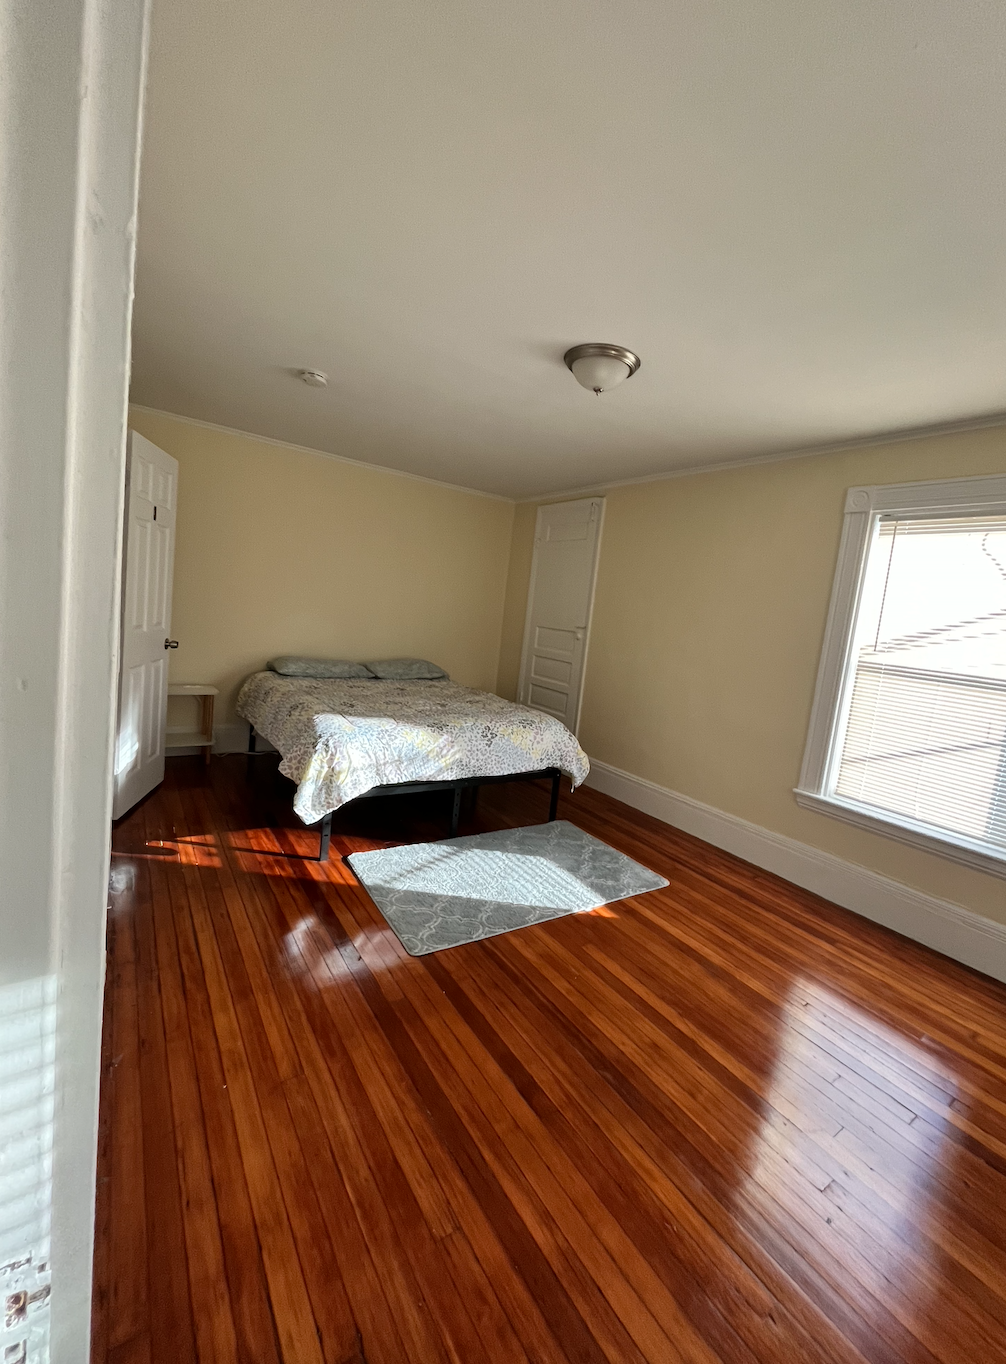 Photos of apartment on Pratt St. Room 3,Boston MA 02134